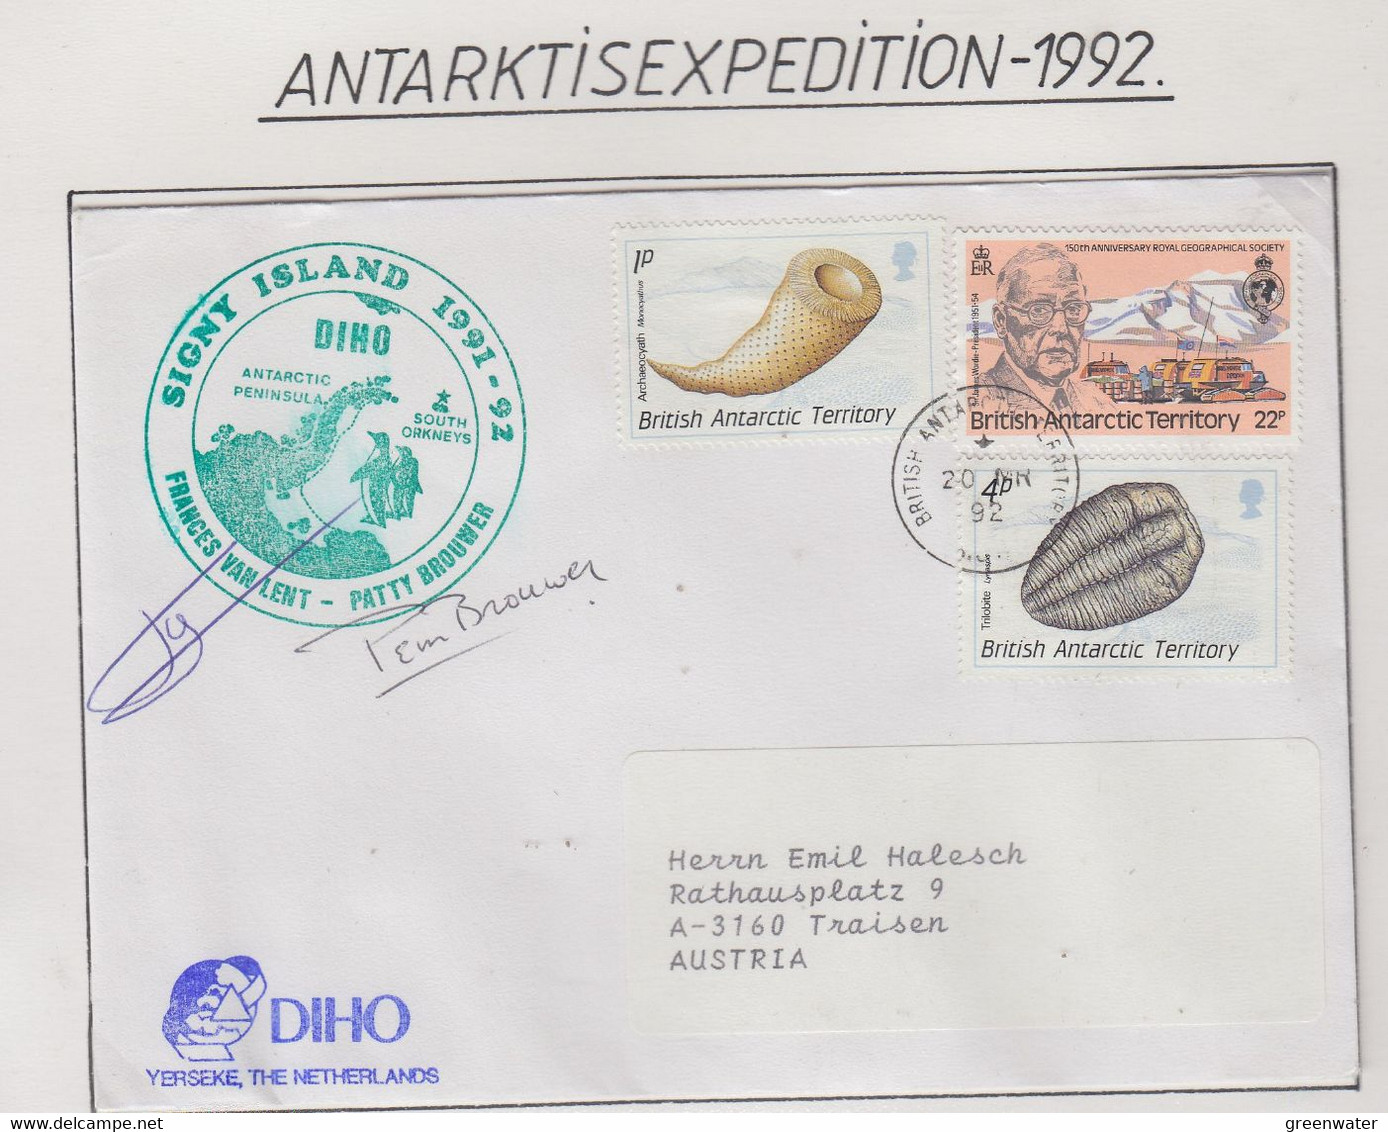 British Antarctic Terr. (BAT)cover Signy INetherlands Ant. Progr. Diho Yerseke 2 Signatures Ca Signy 28  MR 1992 (NL204) - Briefe U. Dokumente